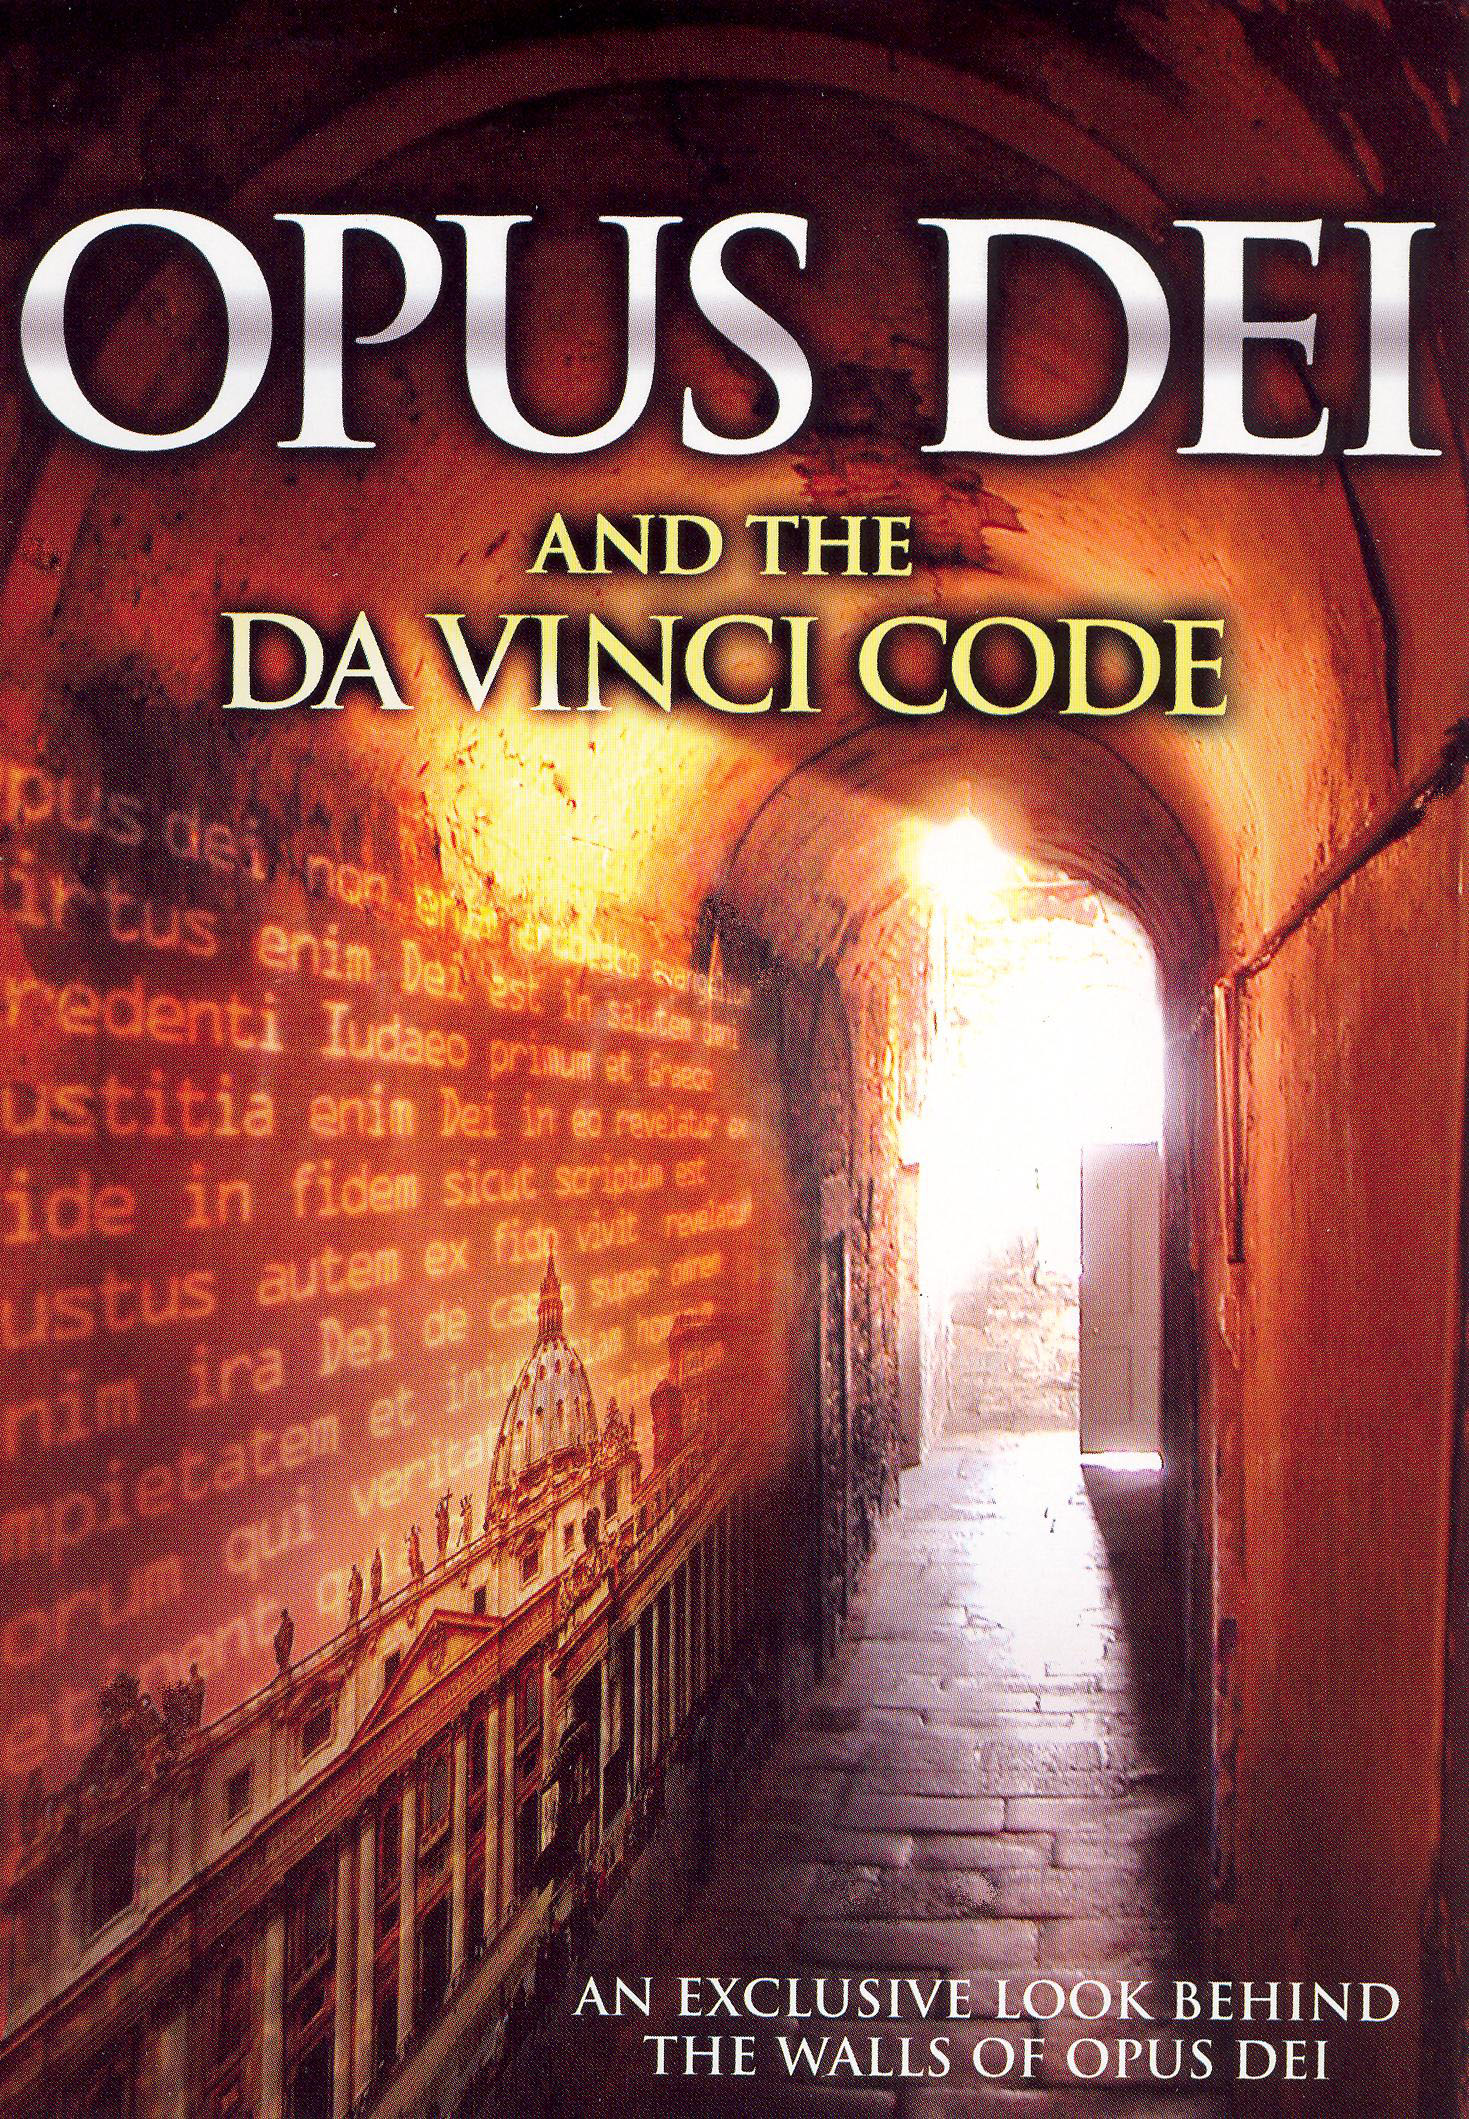 the da vinci code author the da vinci code producer